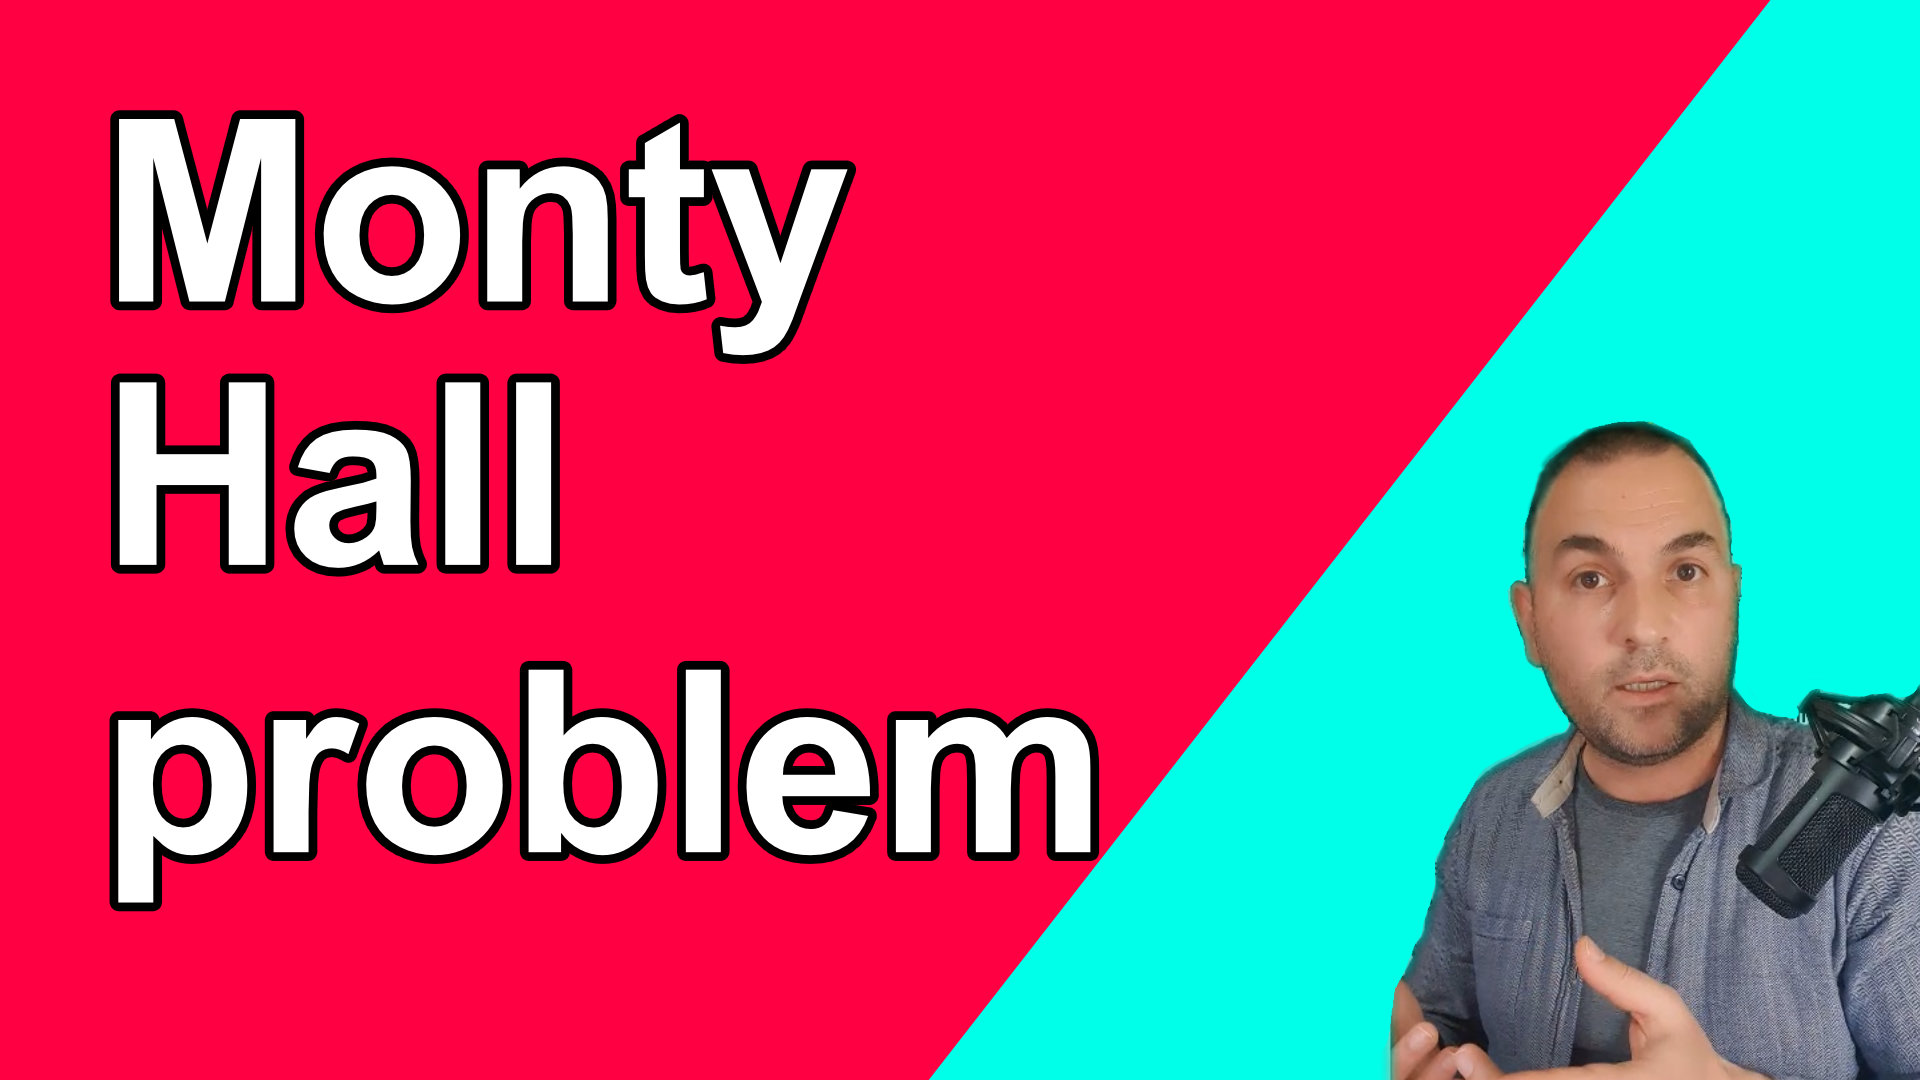 Monty Hall problem